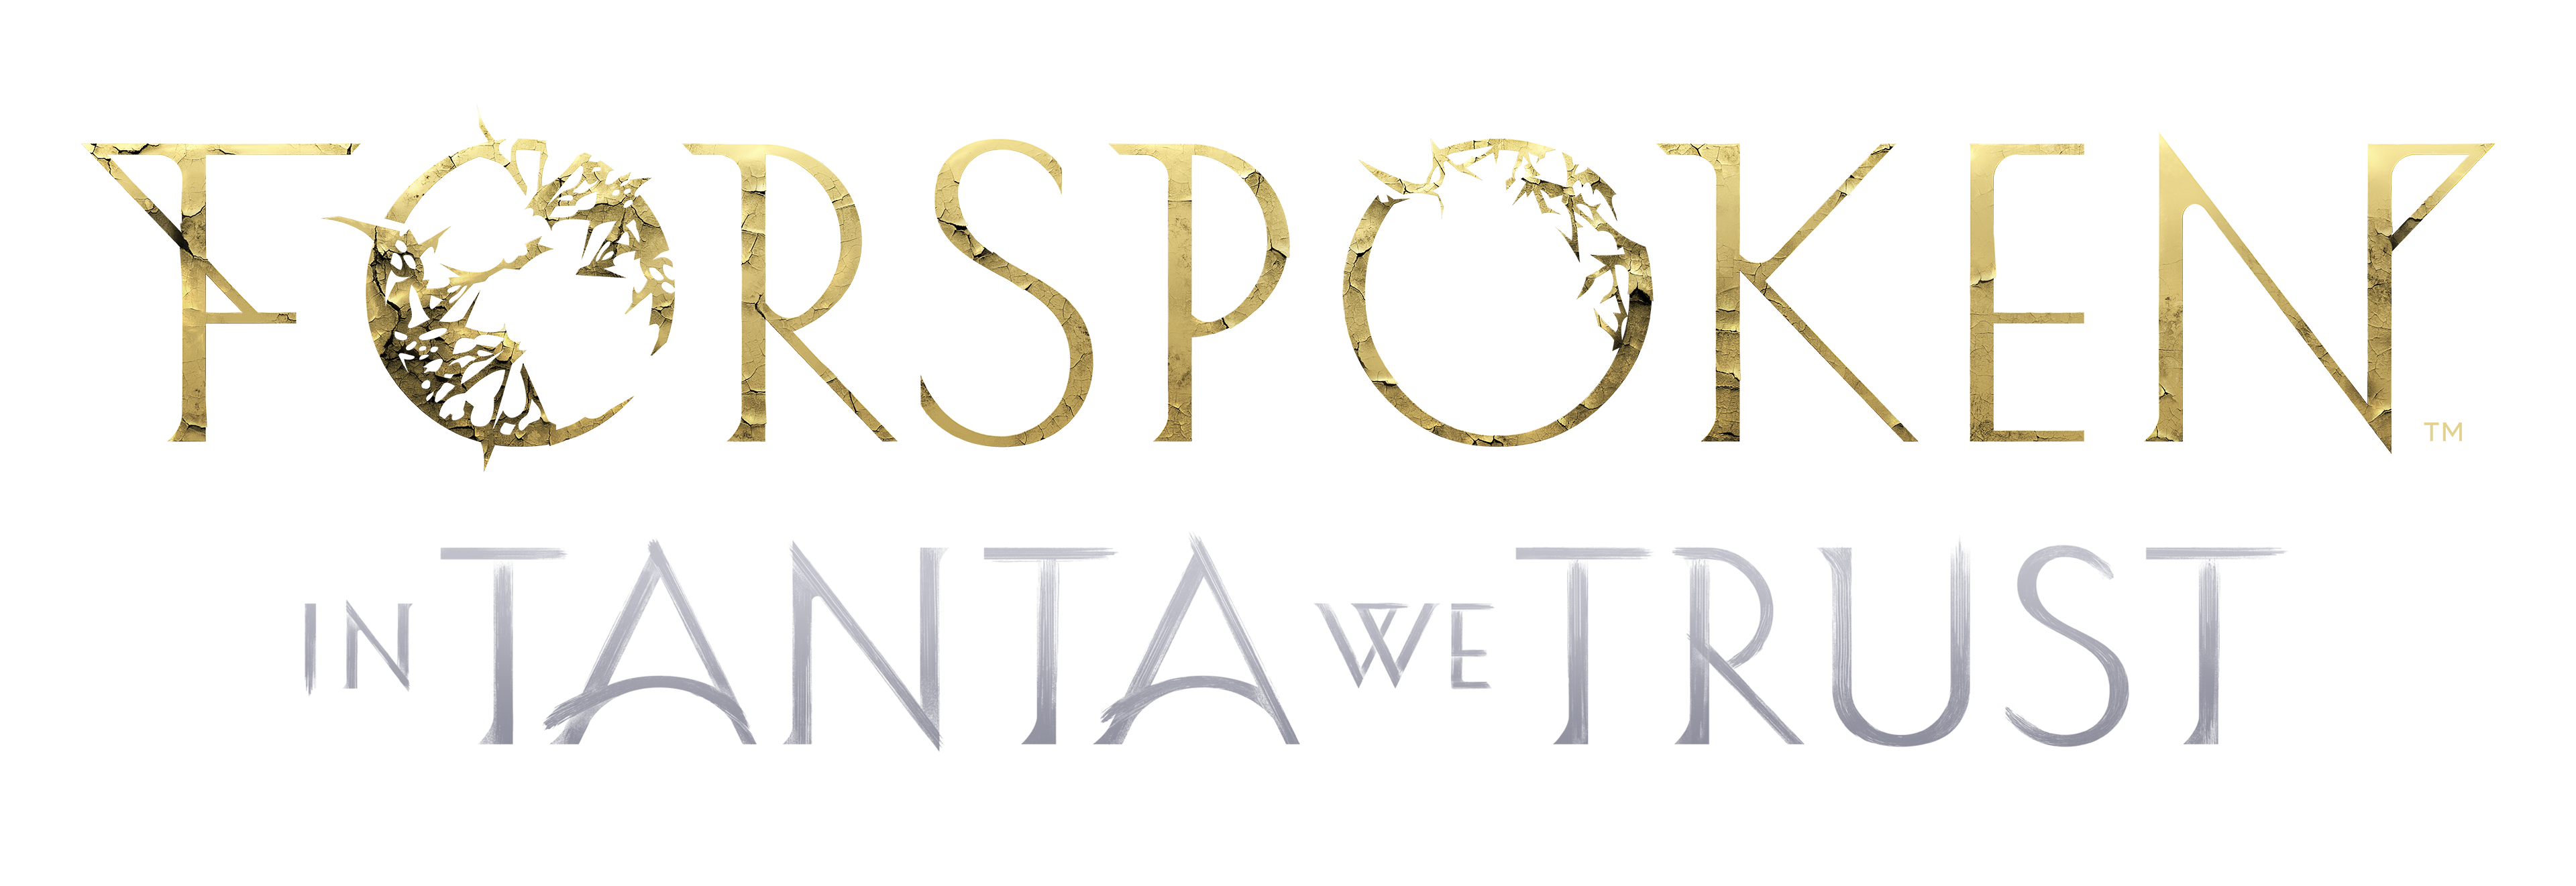 Forspoken - In Tanta We Trust Gameplay Trailer